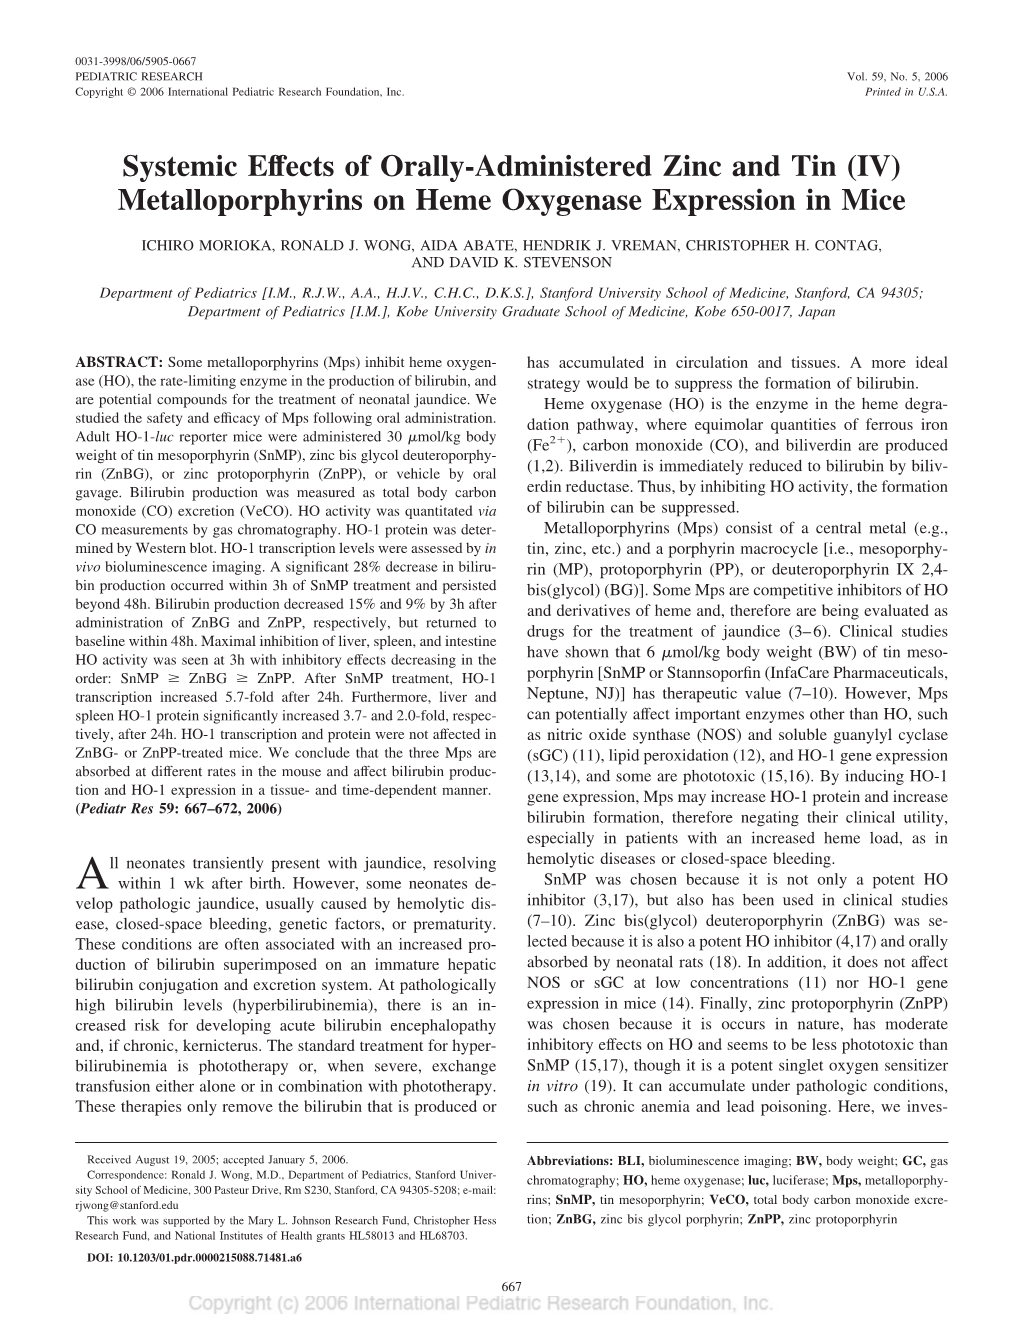 (IV) Metalloporphyrins on Heme Oxygenase Expression in Mice